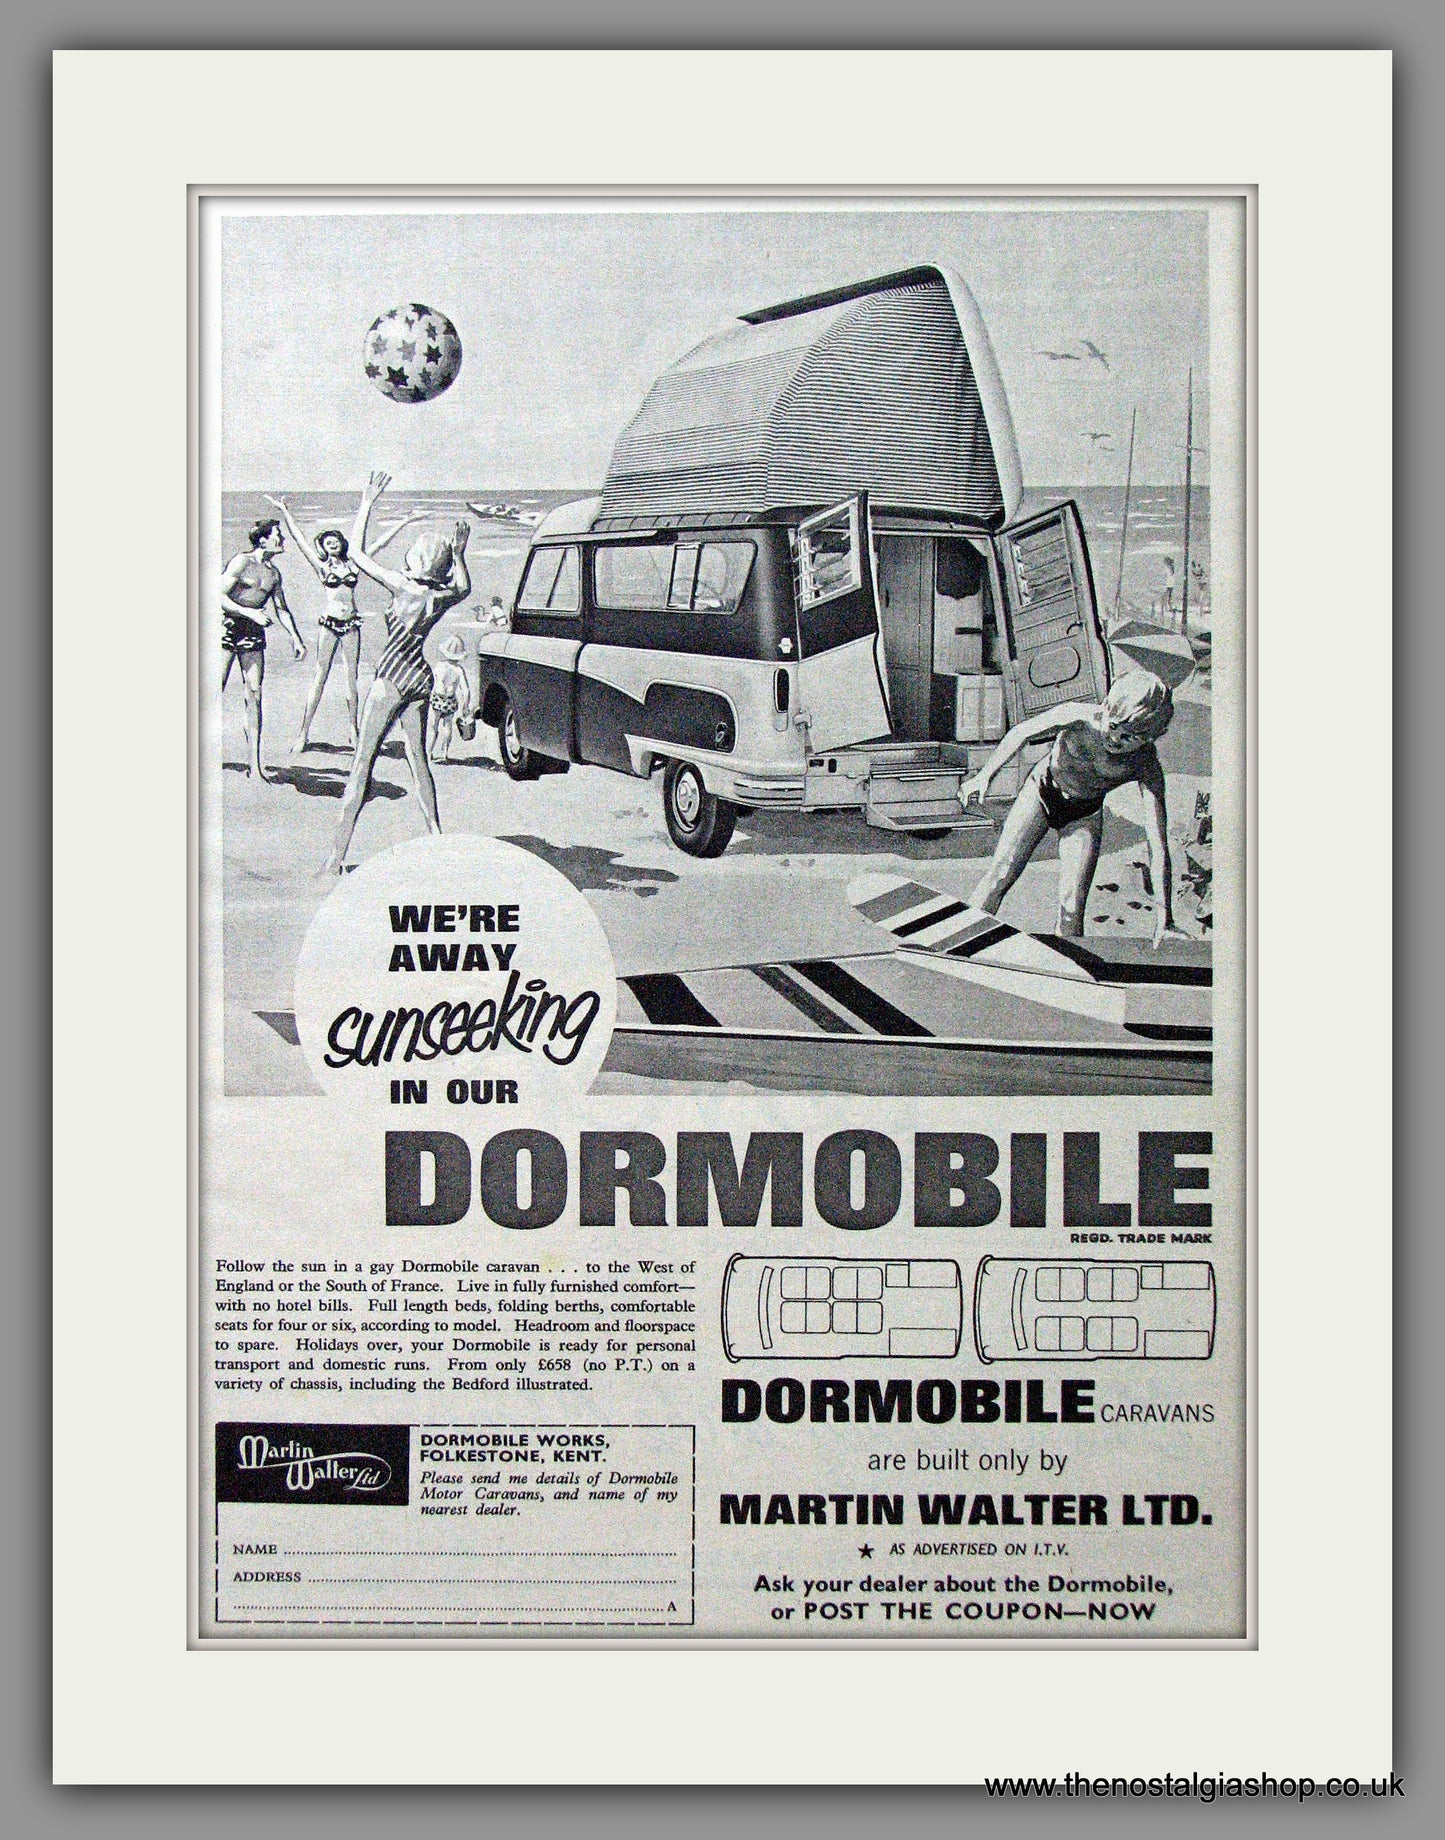 Dormobile Caravan. 1964 Original Advert (ref AD53869)